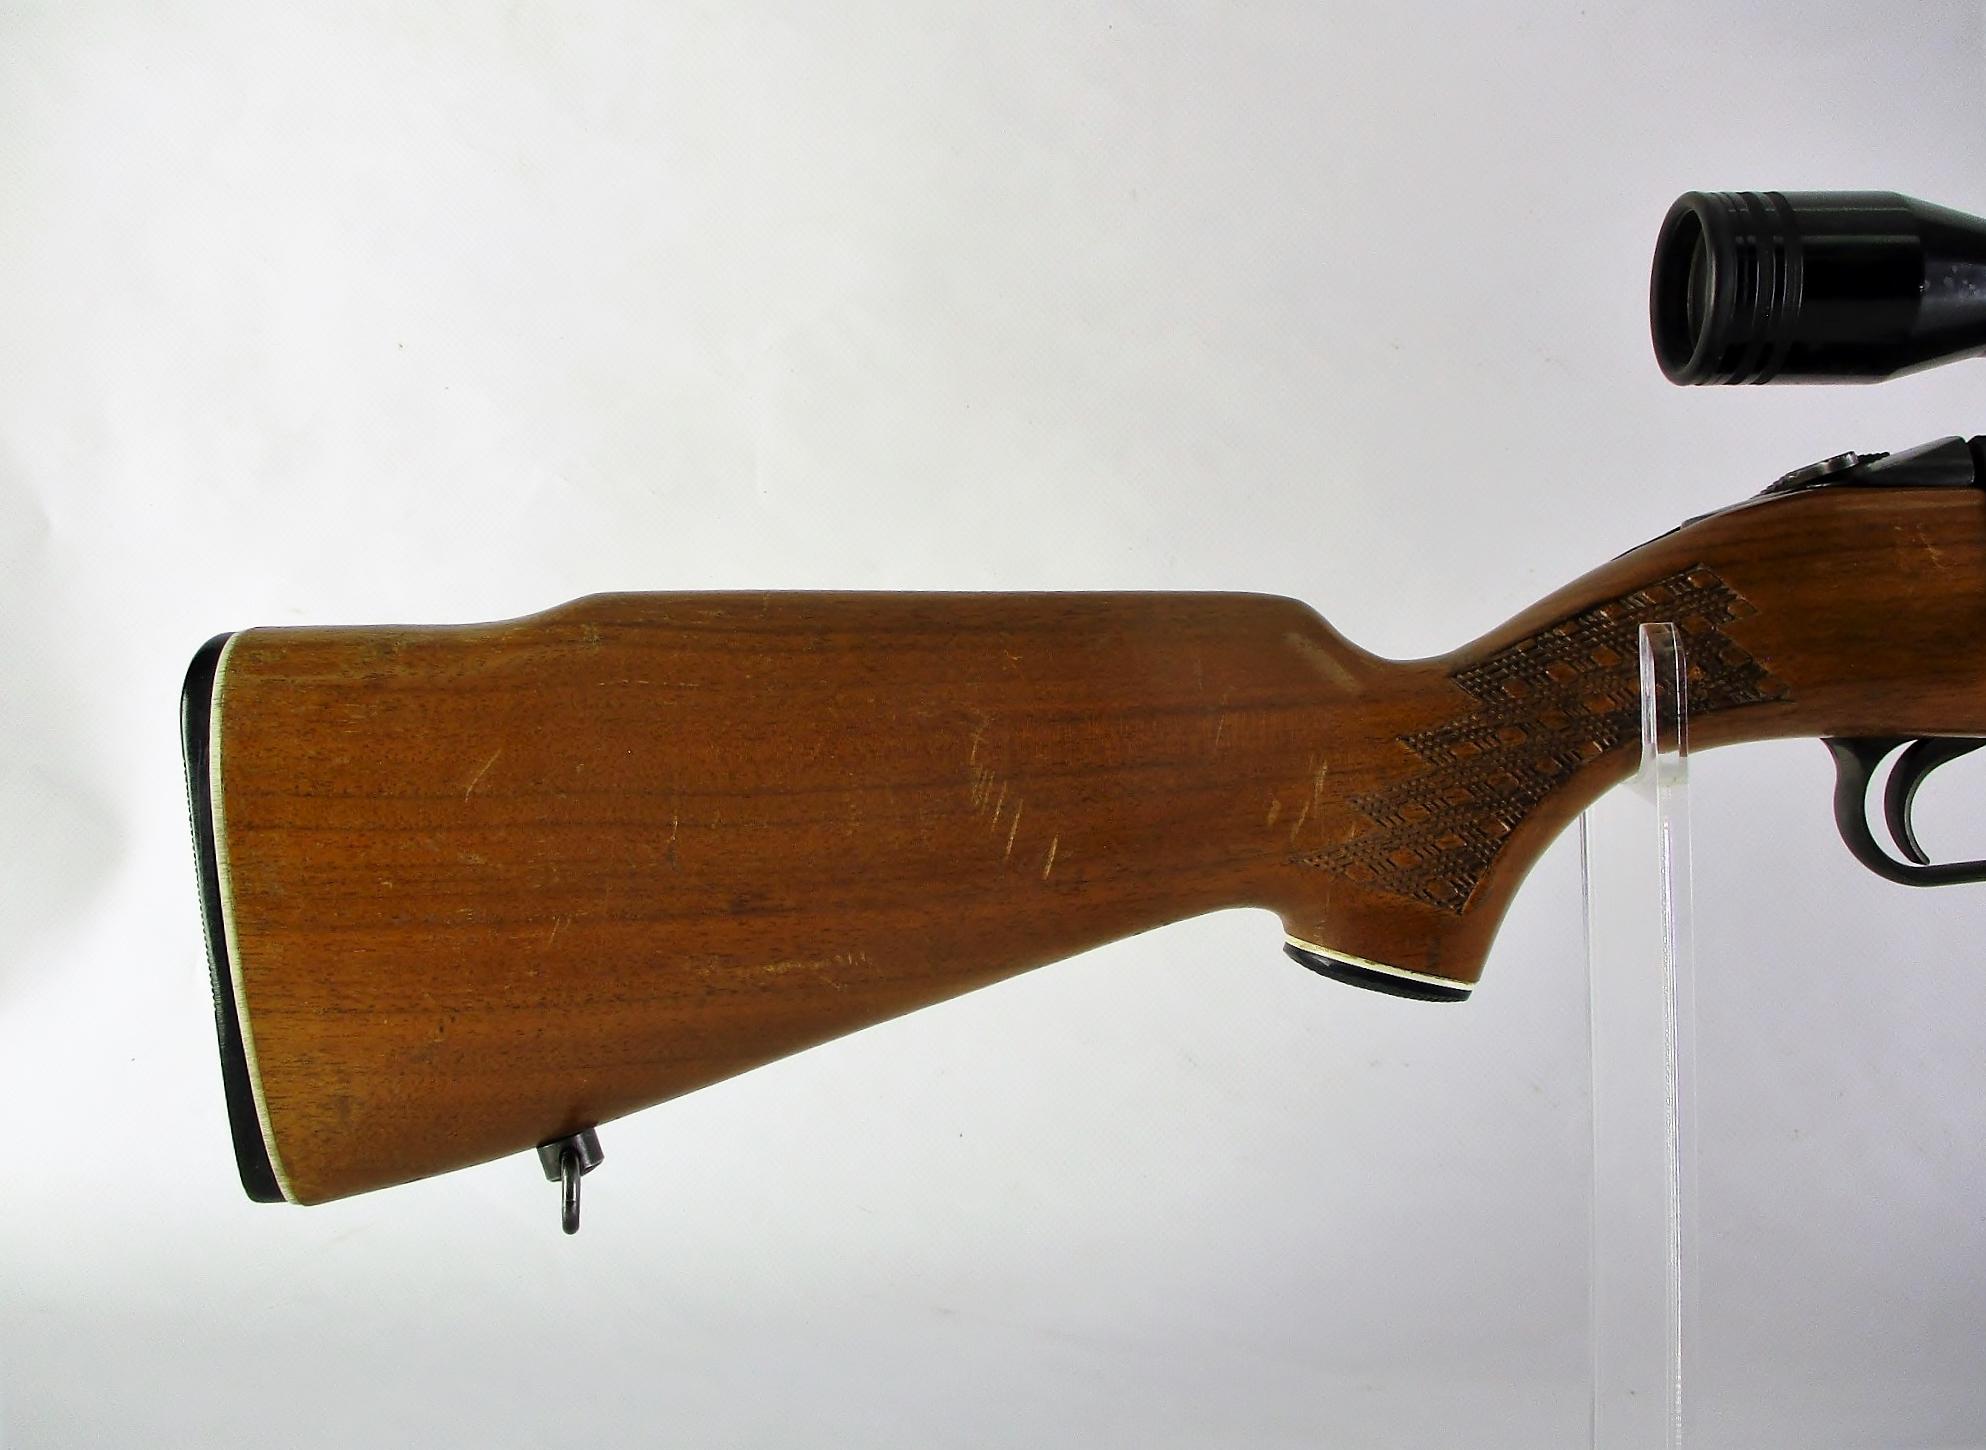 Western Field model M782 B/A rifle